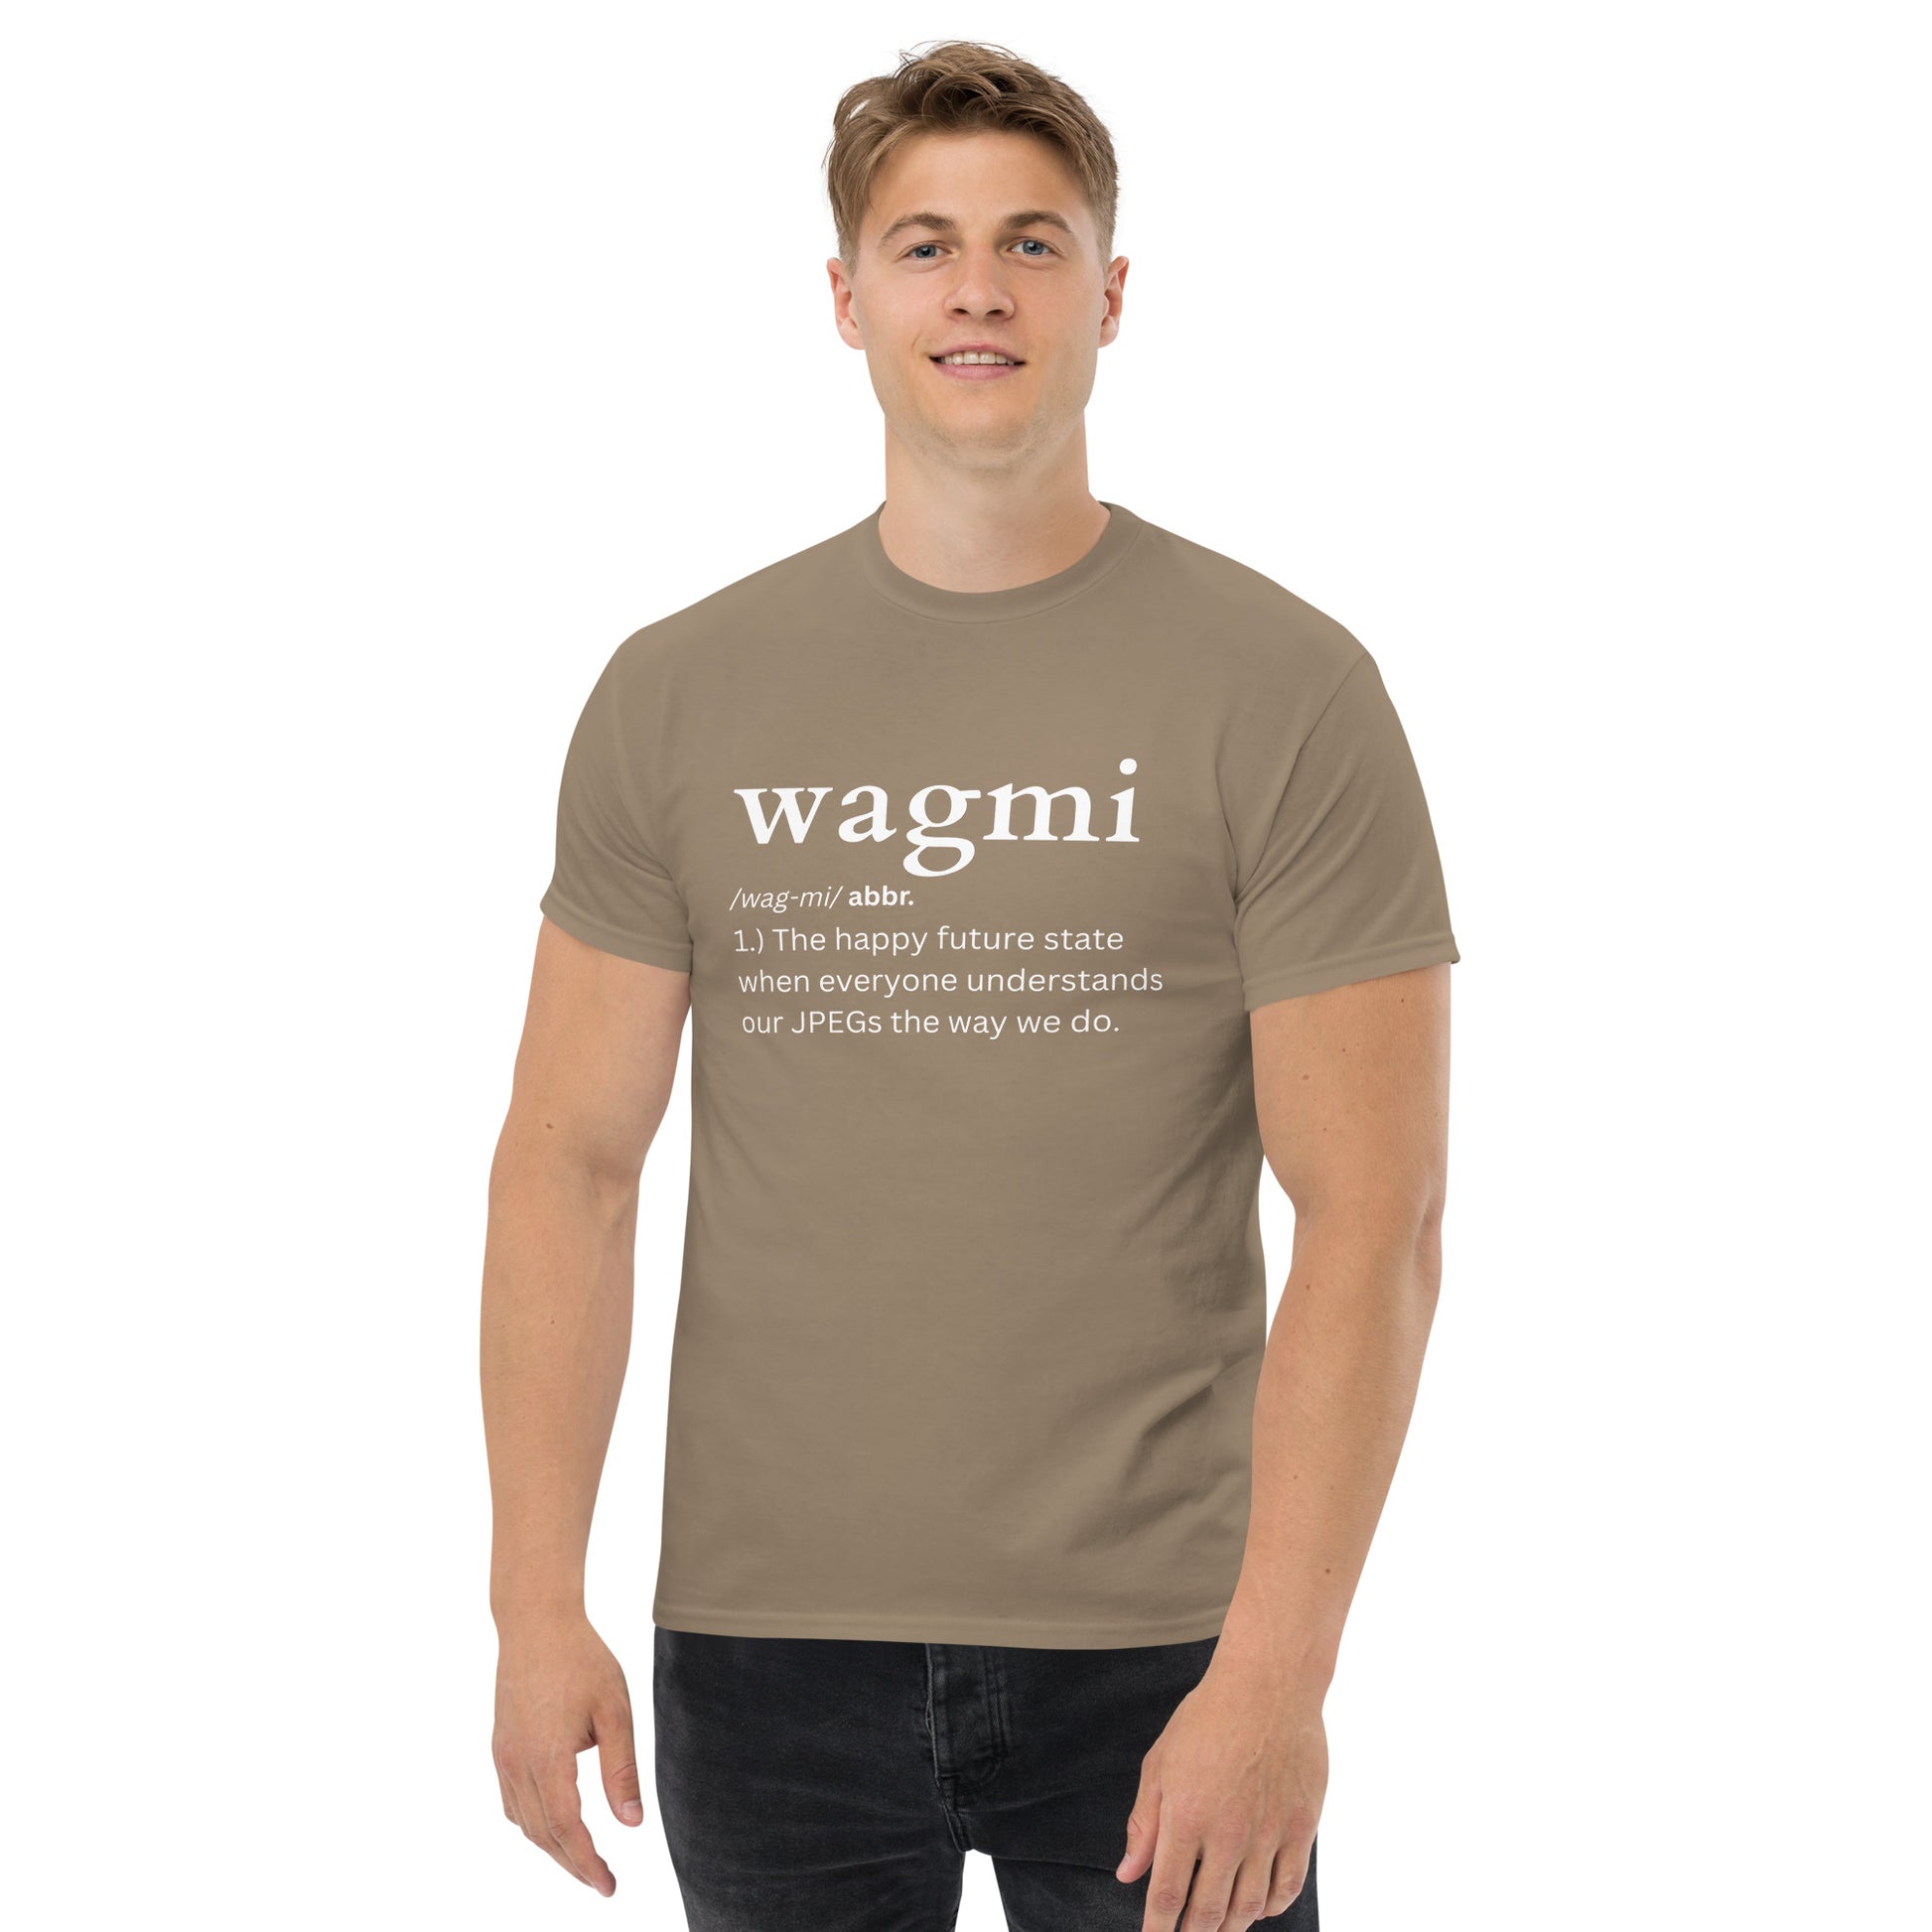 wagmi-tee-shirt-brown-savana